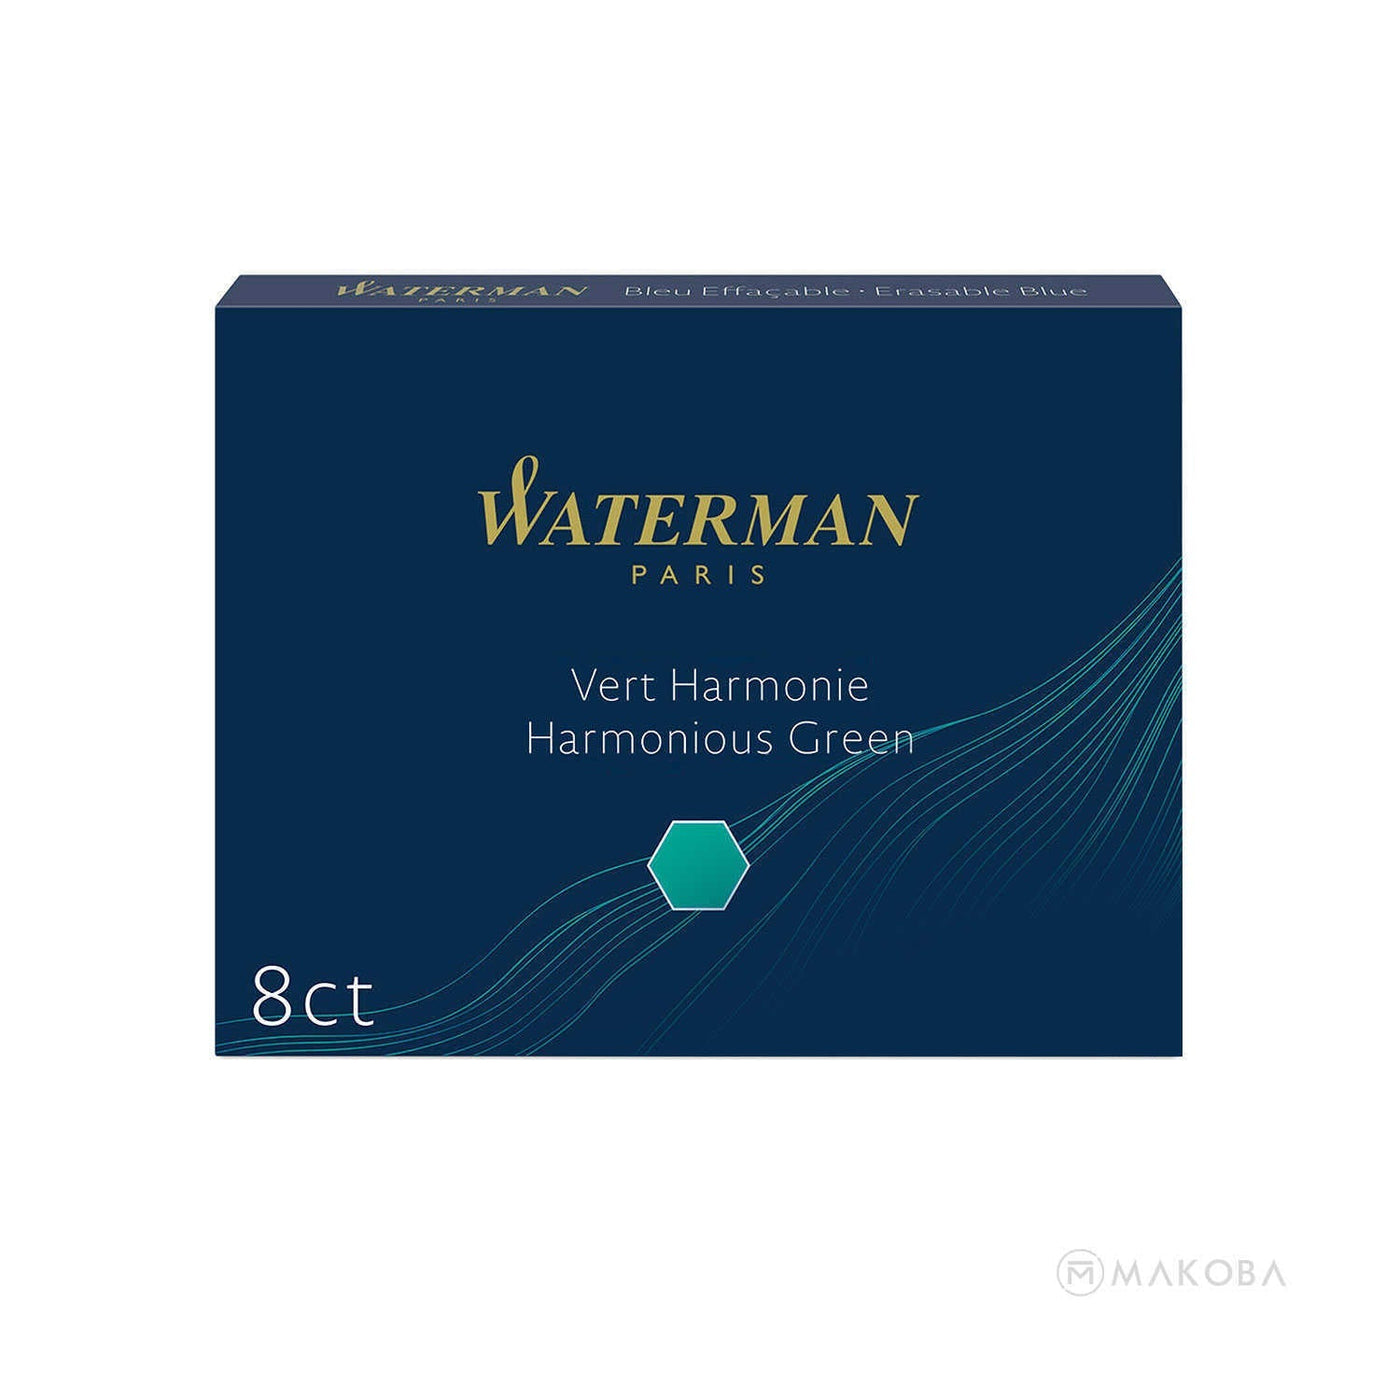 Waterman Long Ink Cartridge Pack of 8 - Harmonious Green 1